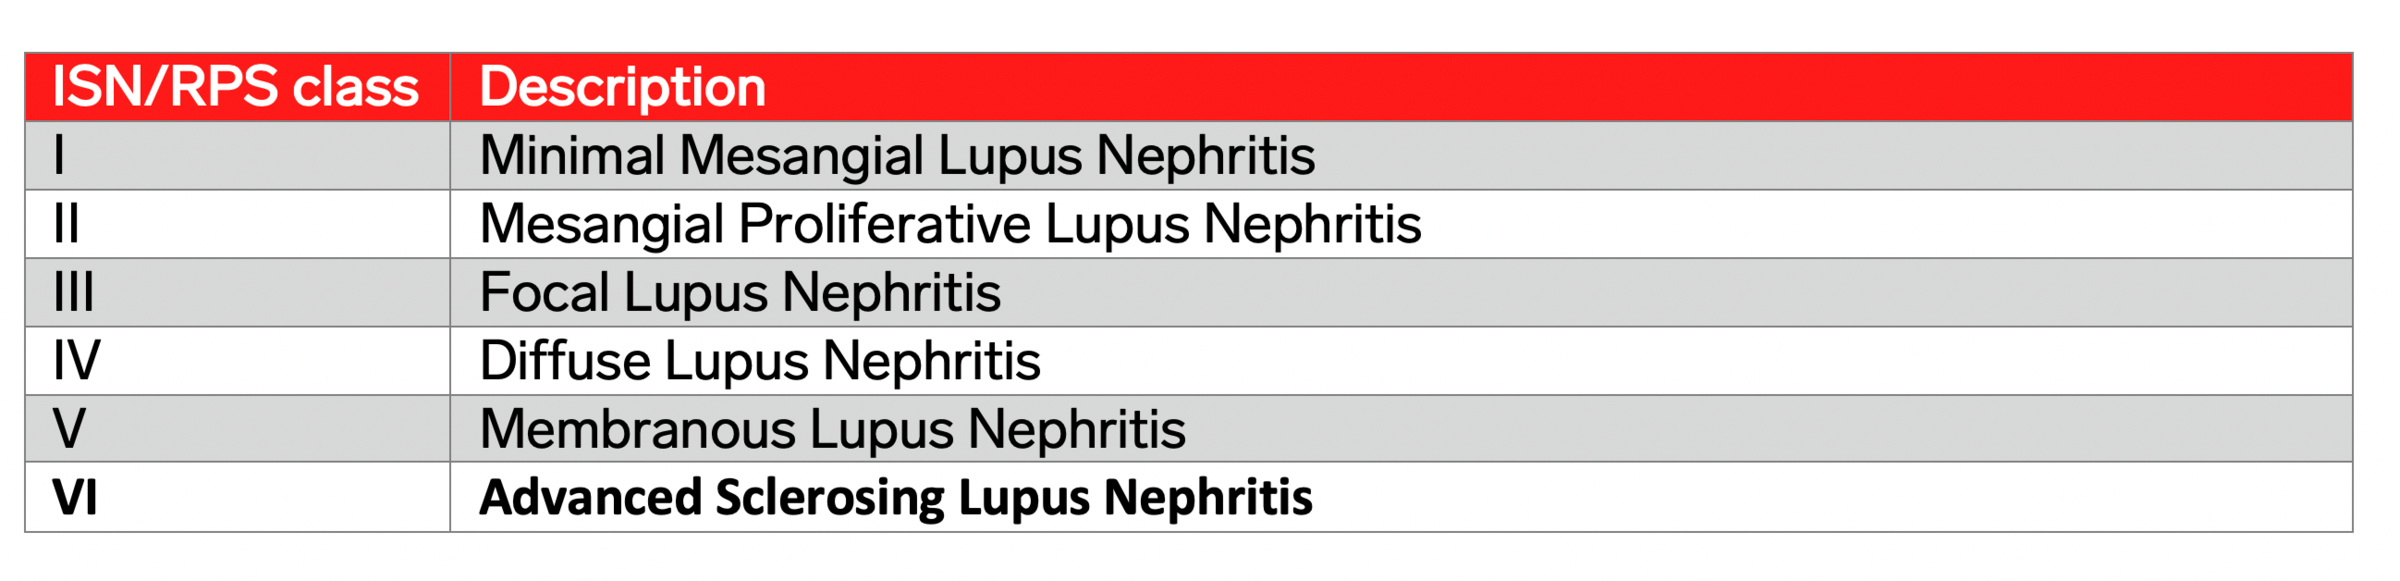 ISN/RPS class, classification of lupus nephritis